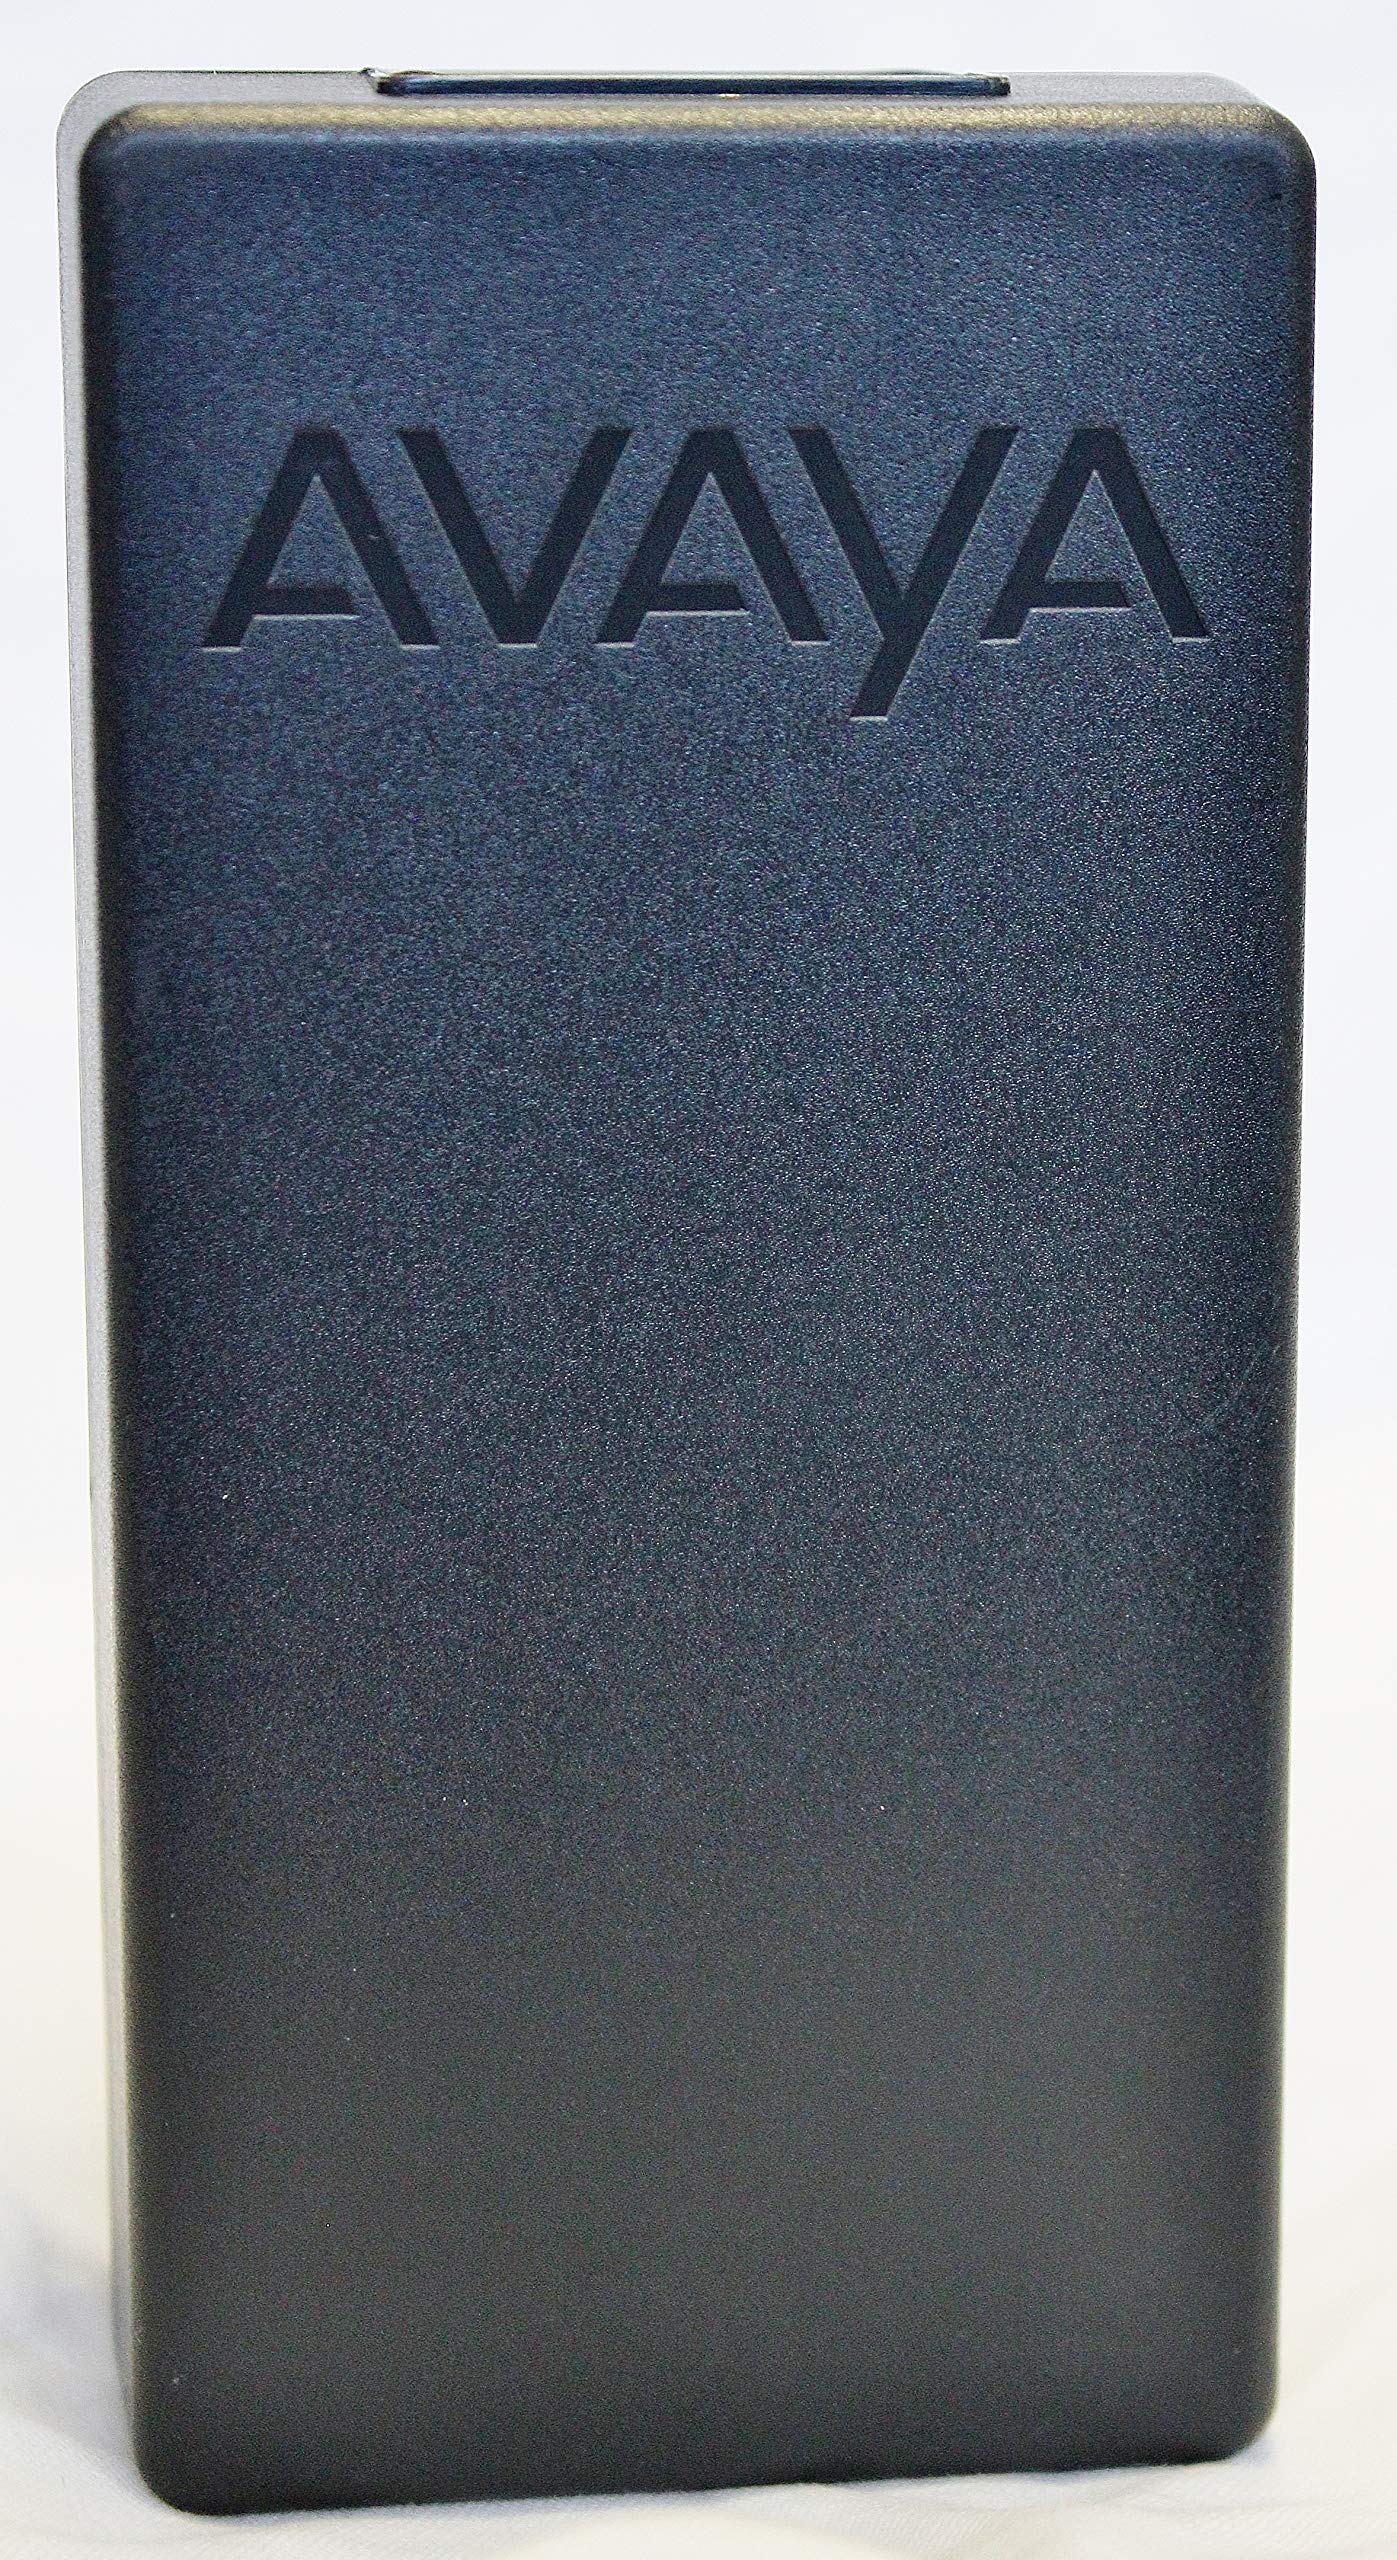 Genuine Avaya 1151D1 IP Phone Power Supply